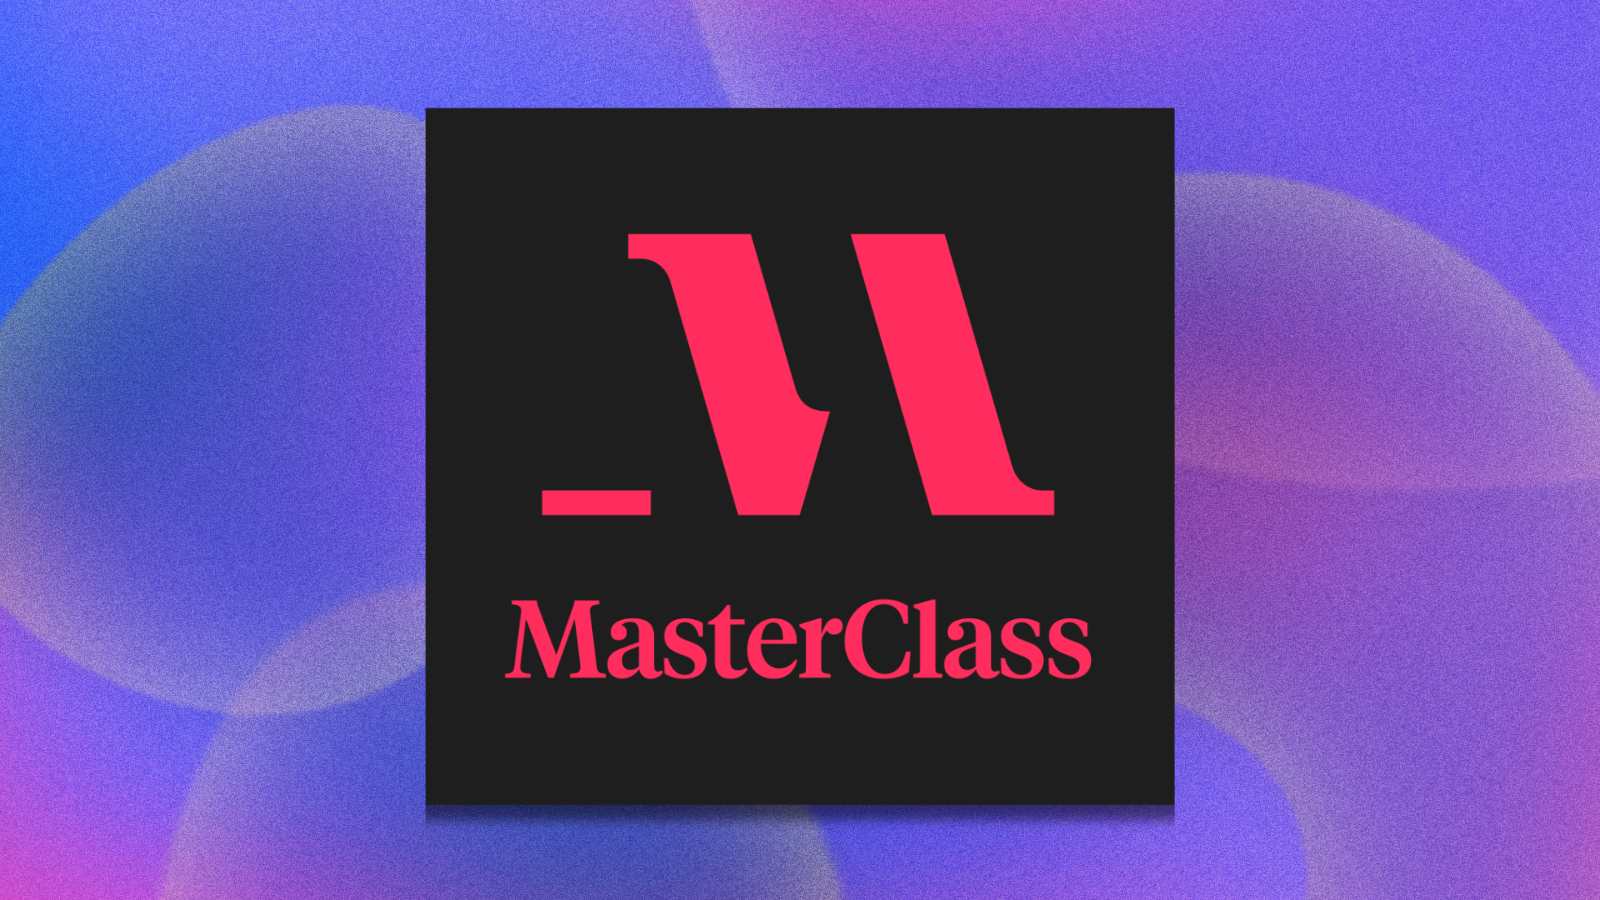 MasterClass logo on purple abstract background